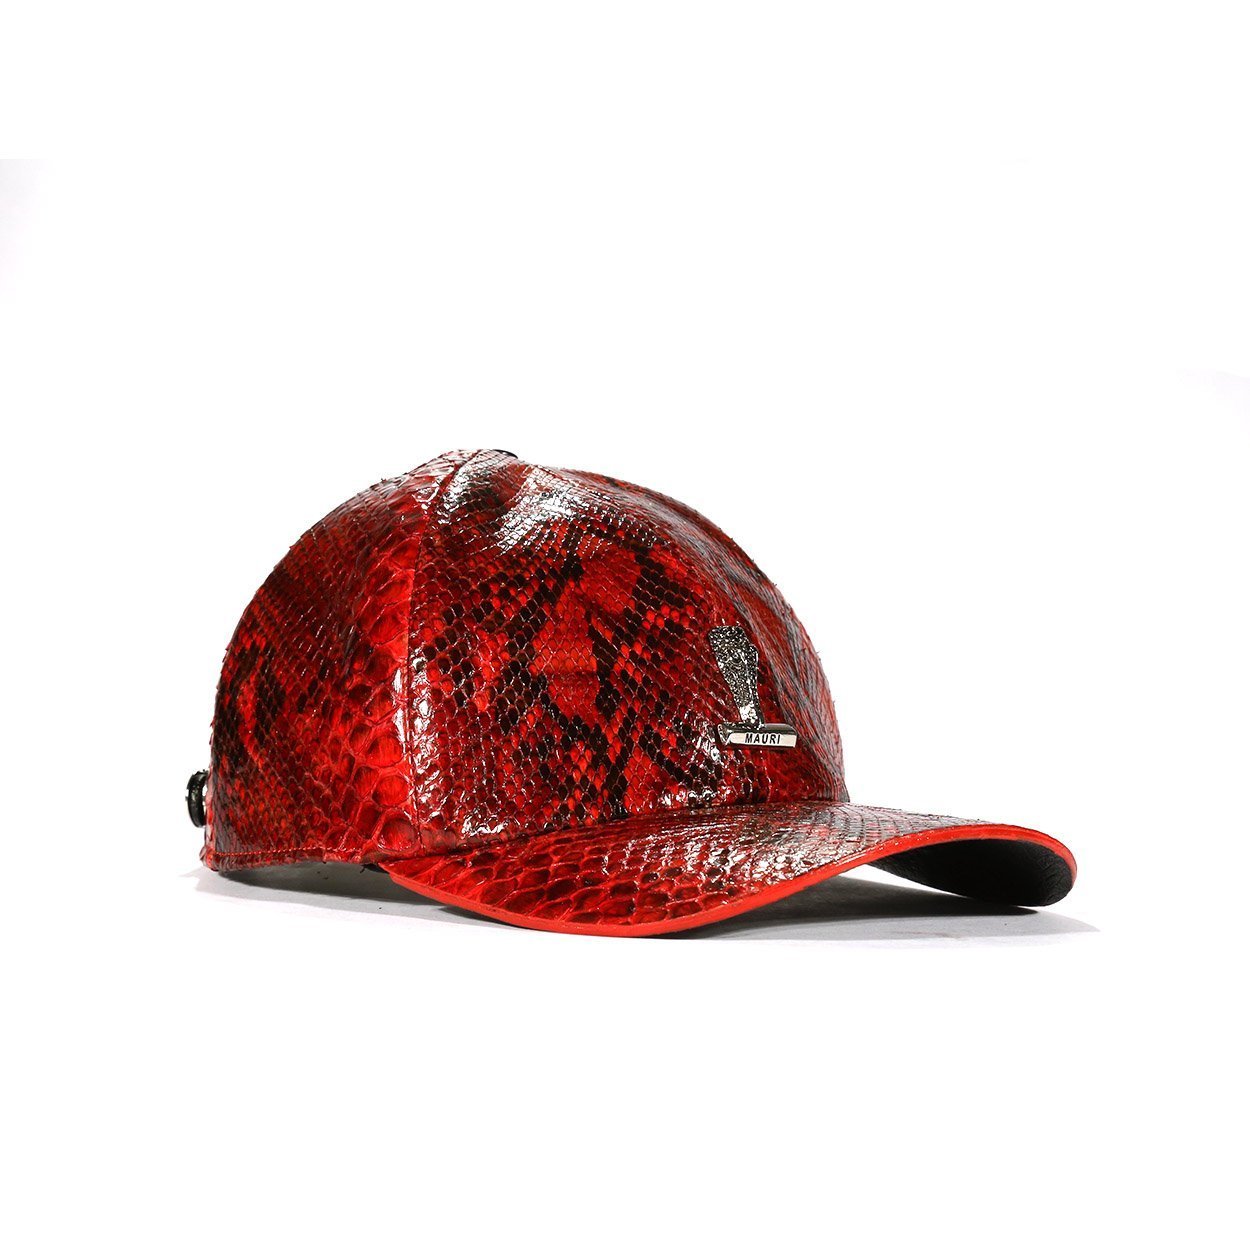 Mauri Cap H65 Men's Black & Red Exotic Snake-Skin Hat (MAH1017)